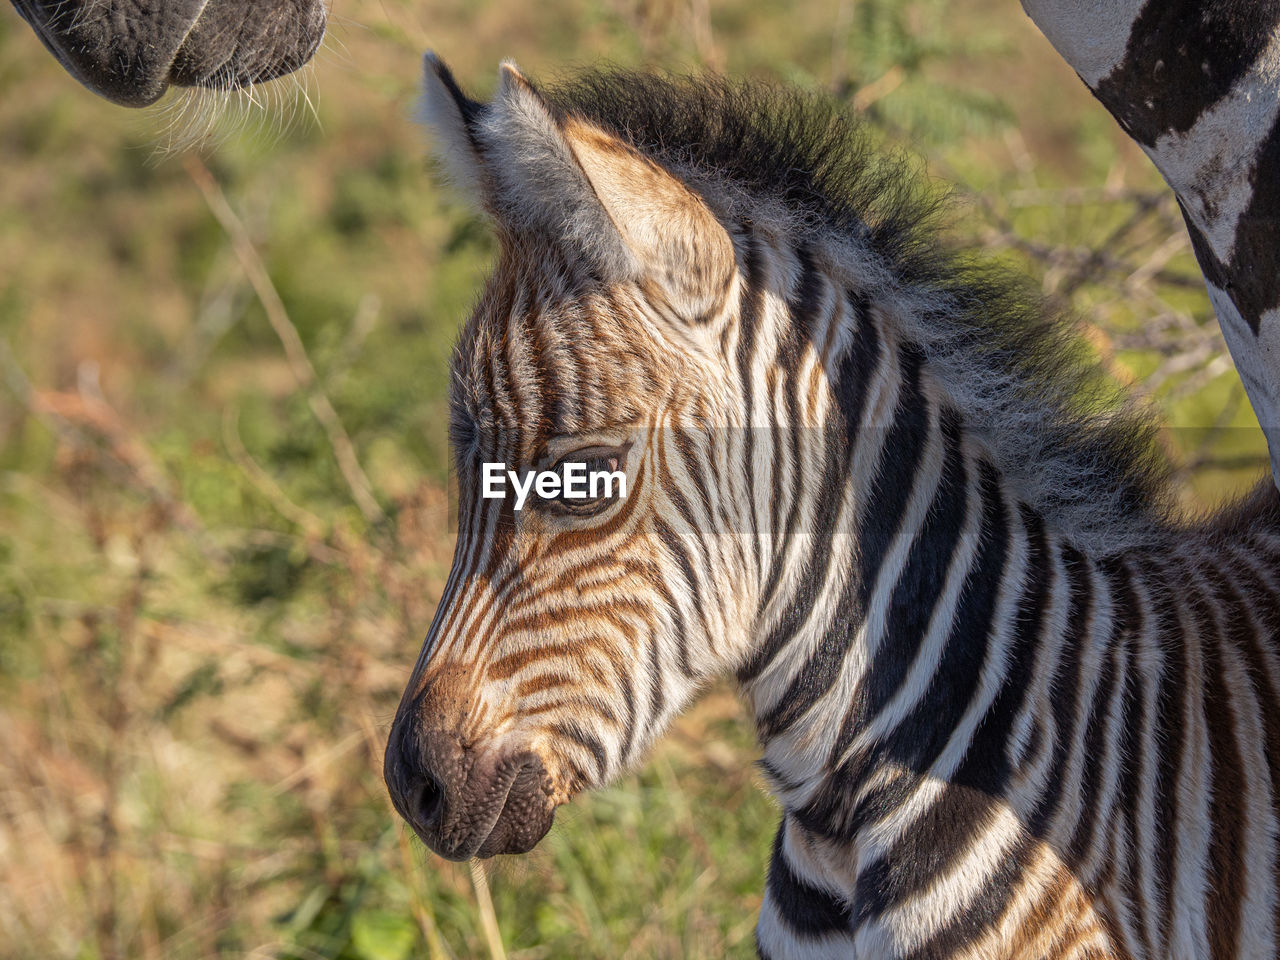 A portrait of a beautiful young zebra 